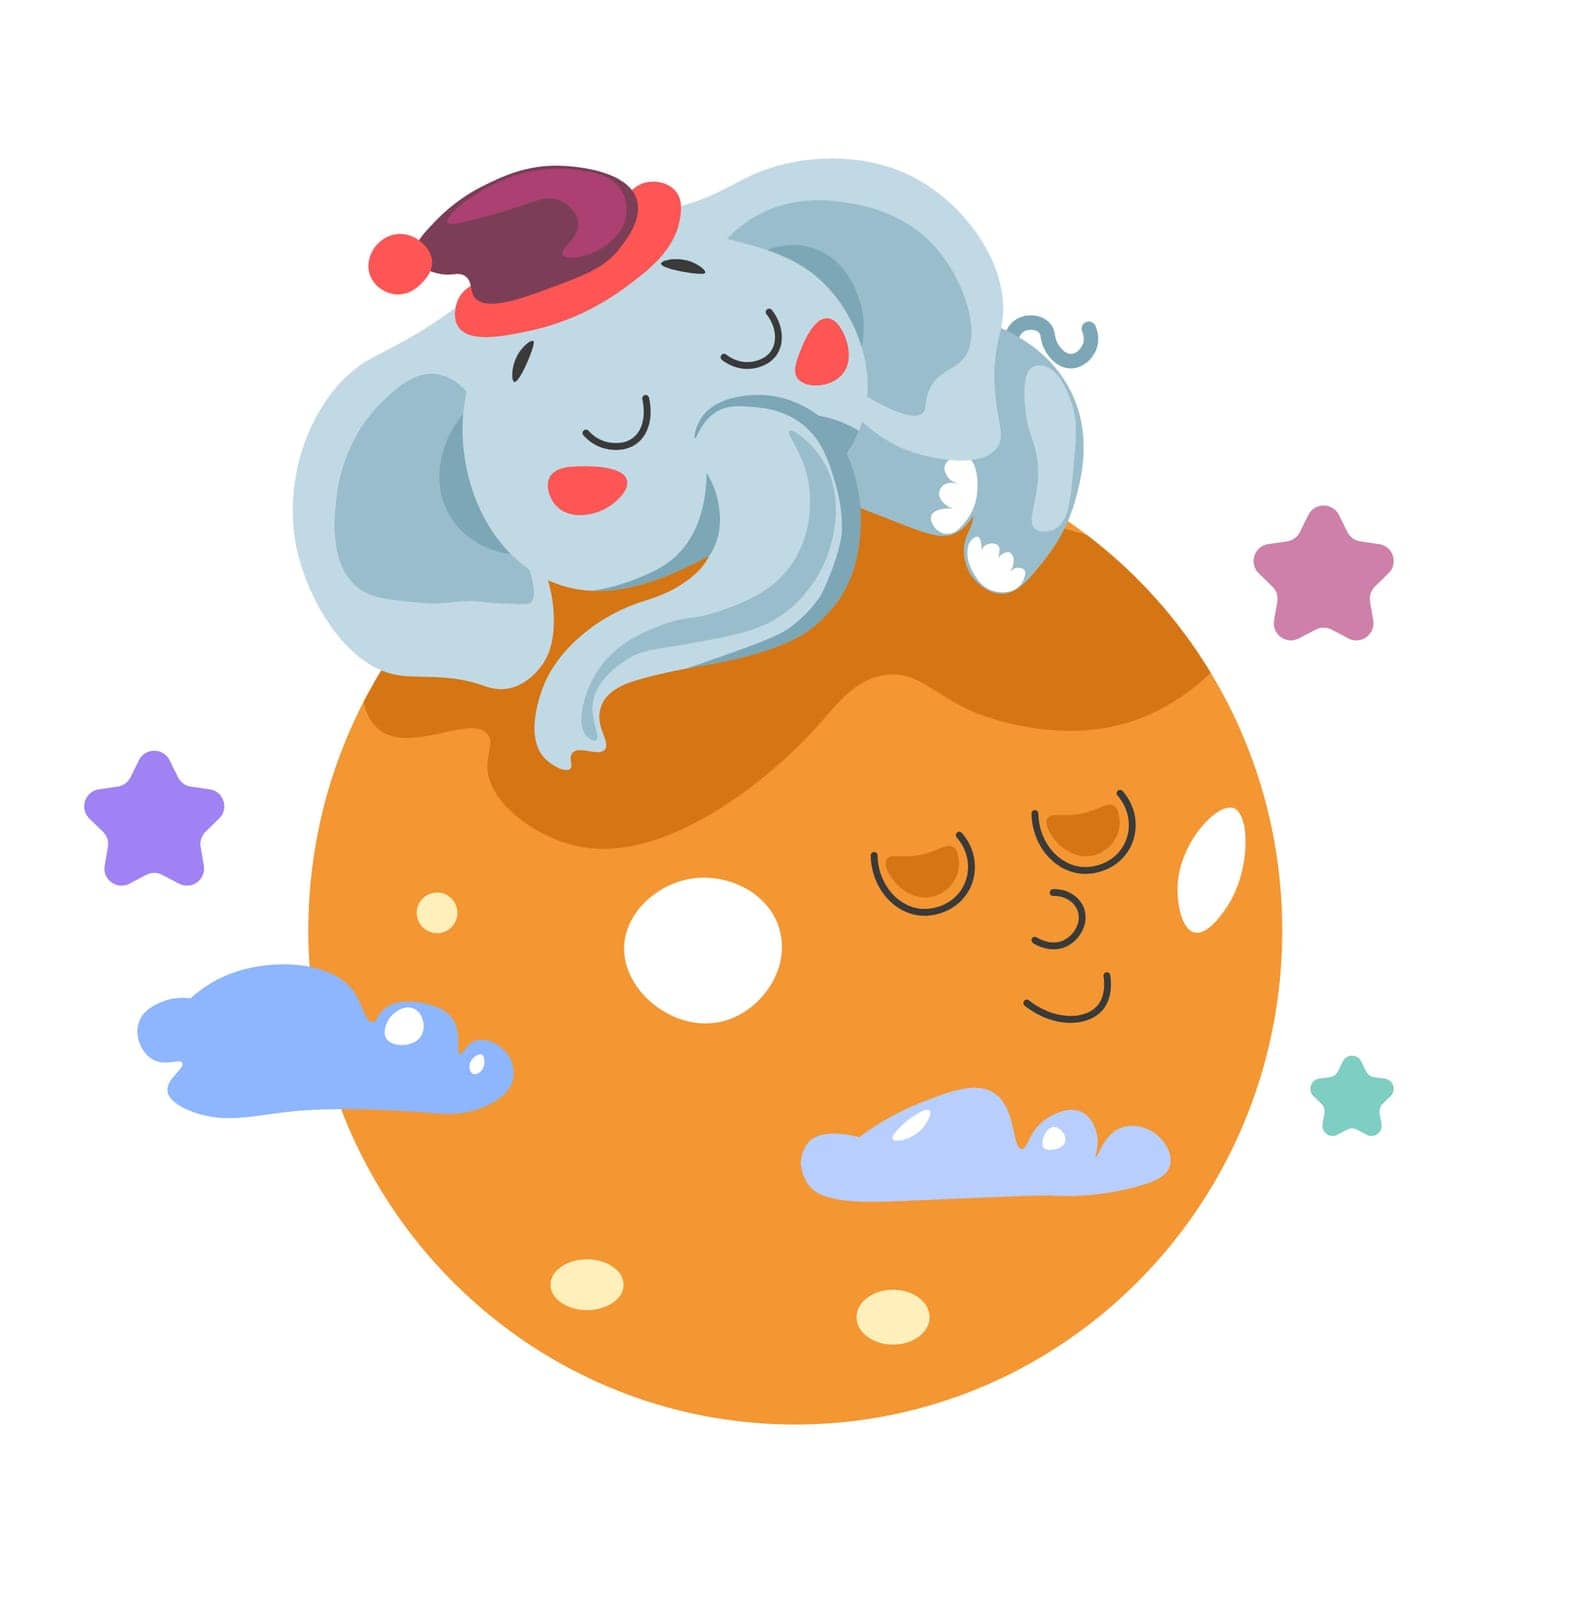 Sleepy elephant character on full moon vector by Sonulkaster